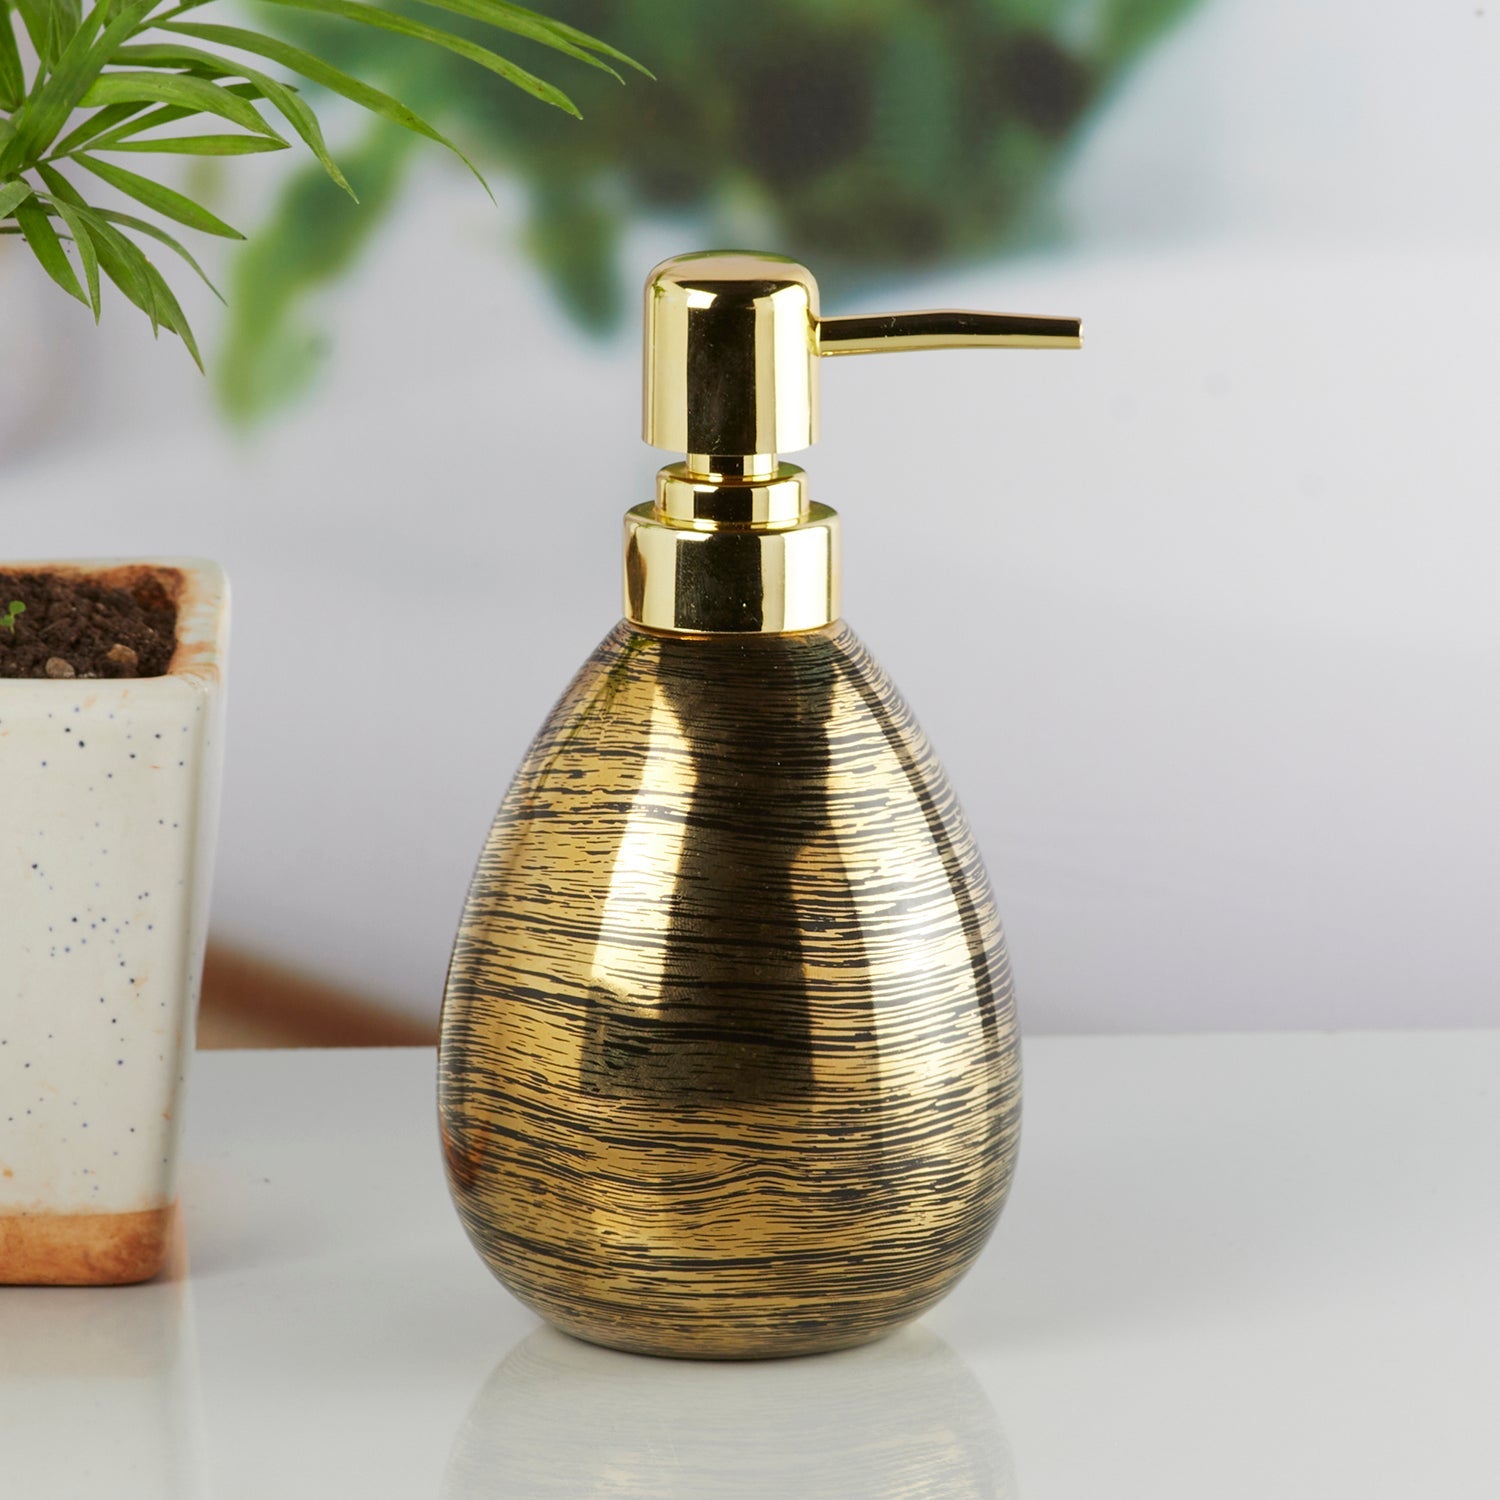 Ceramic Soap Dispenser handwash Pump for Bathroom, Set of 1, Stone (10311)